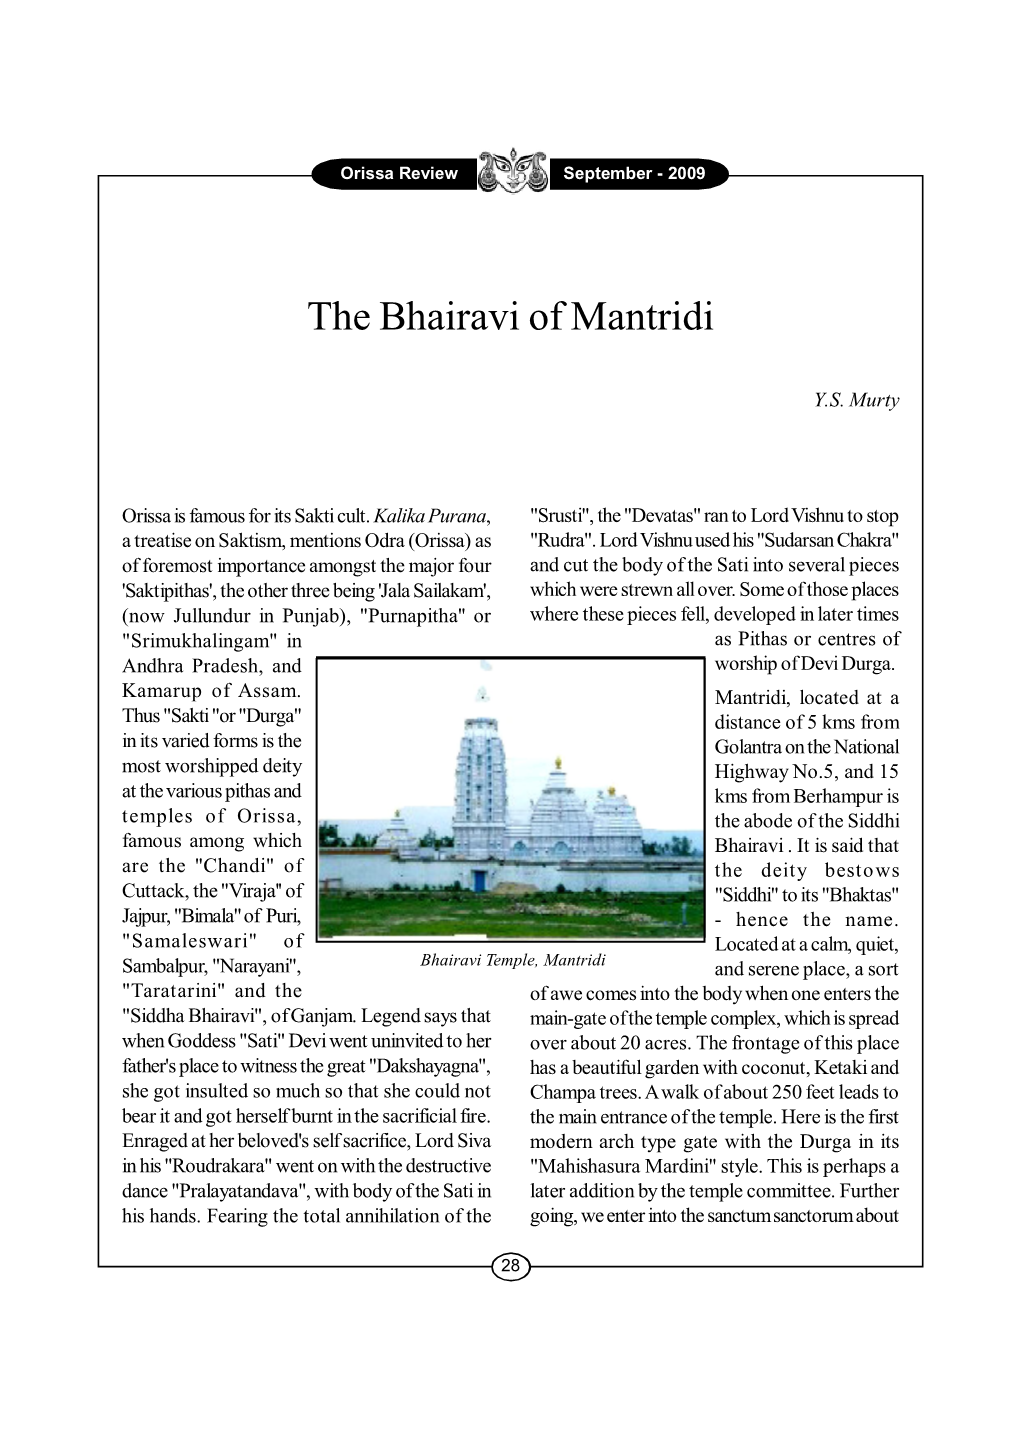 The Bhairavi of Mantridi